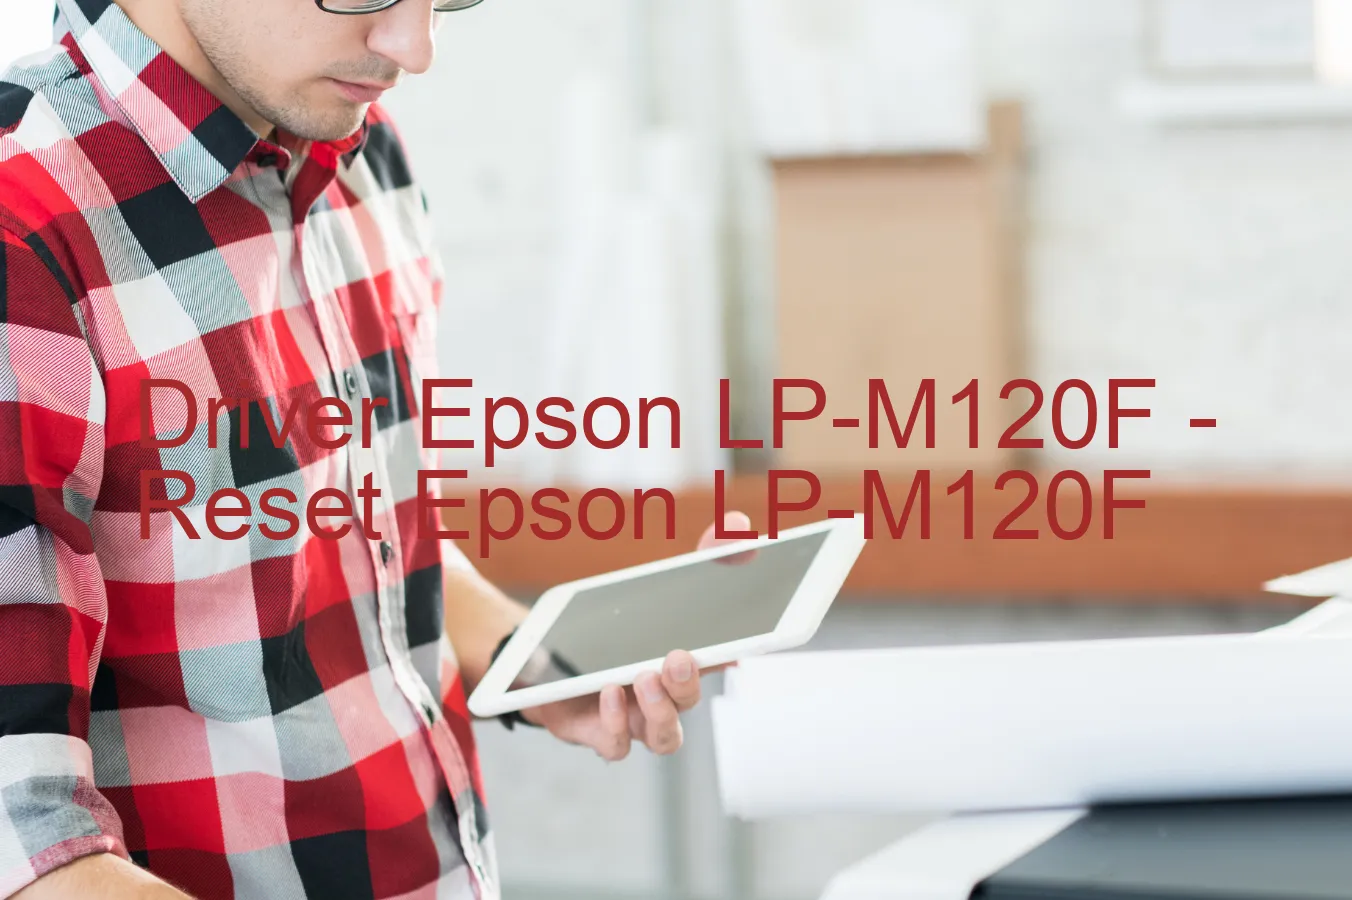 Epson LP-M120Fのドライバー、Epson LP-M120Fのリセットソフトウェア